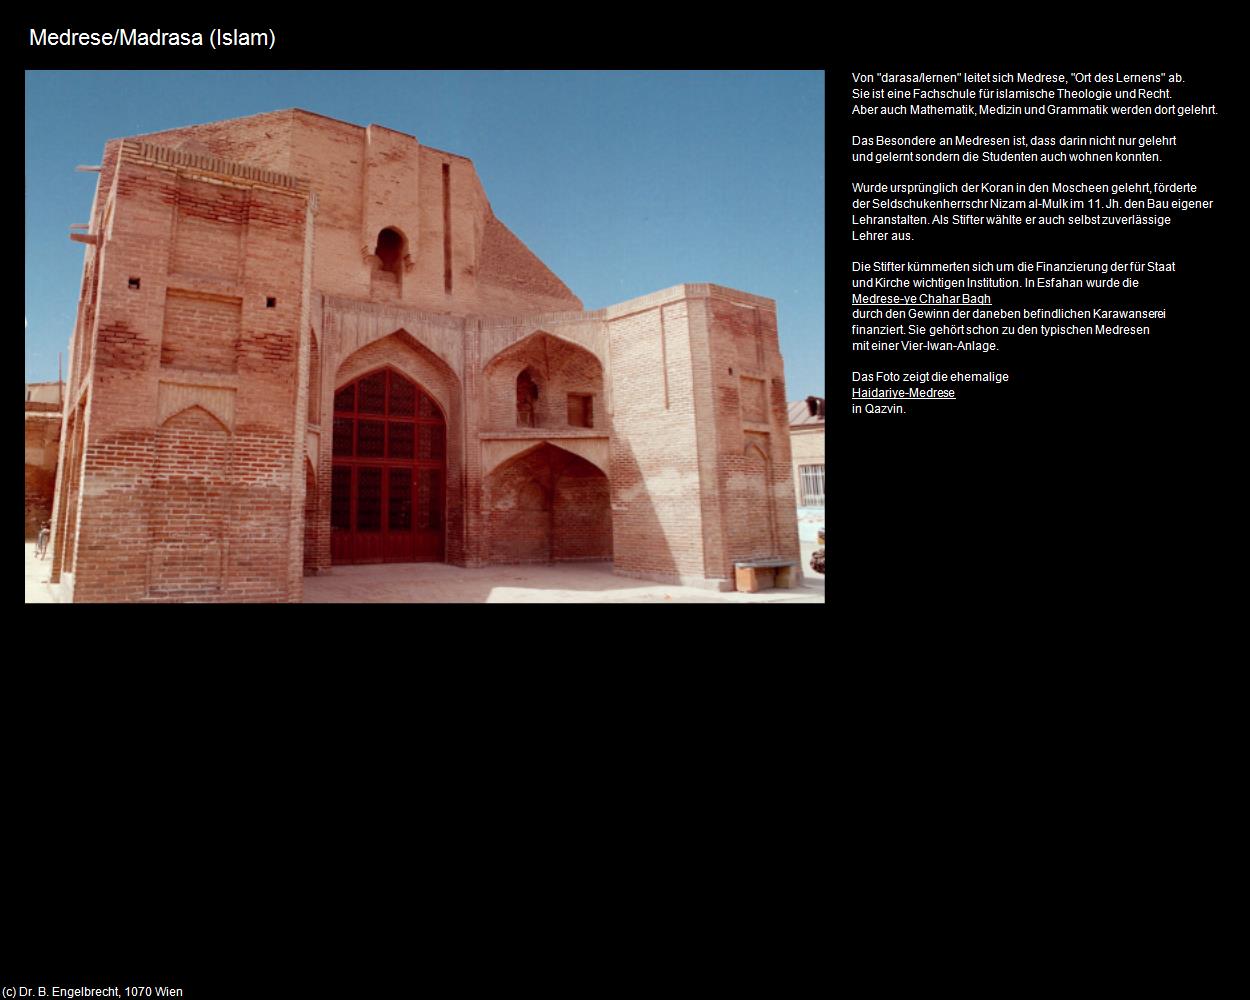 Medrese/Madrasa (IRAN-Religion II - Islam) in Iran(c)B.Engelbrecht